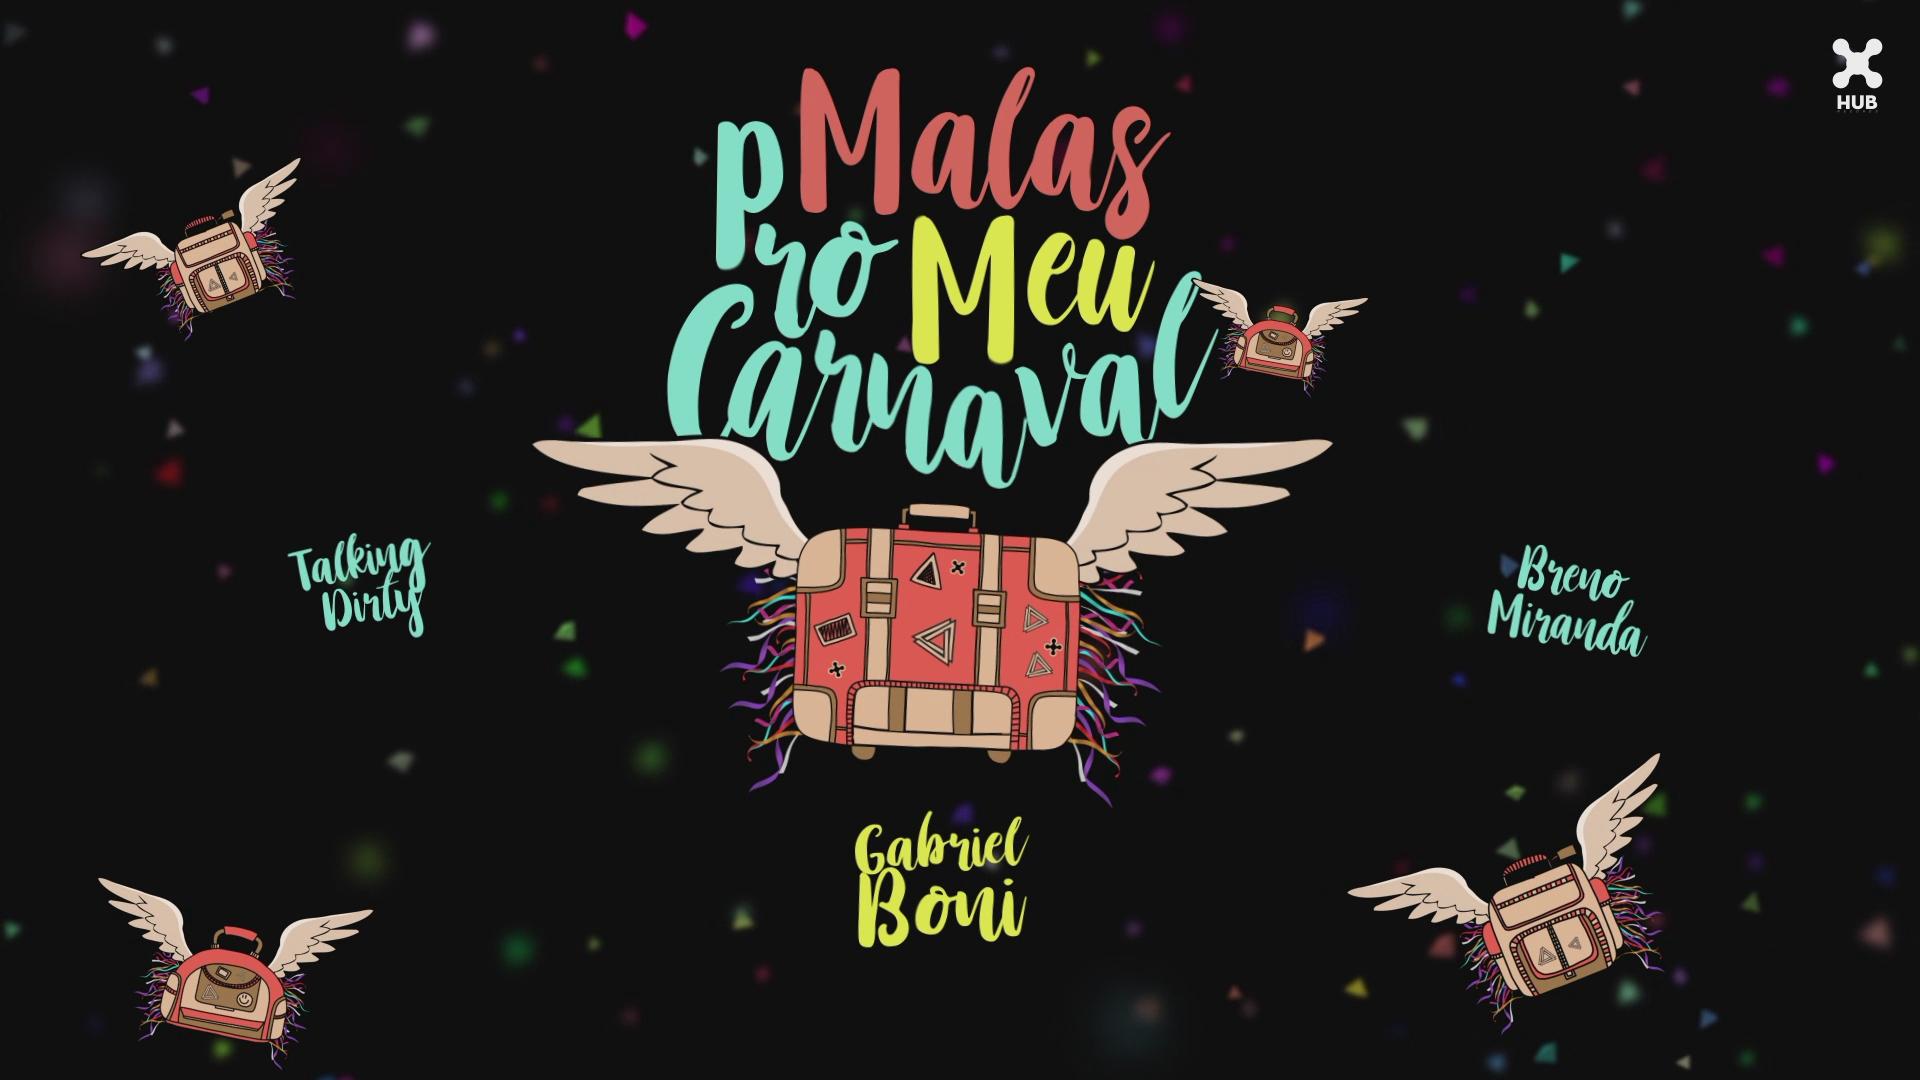 Gabriel Boni - Malas pro Meu Carnaval (Lyric Video)